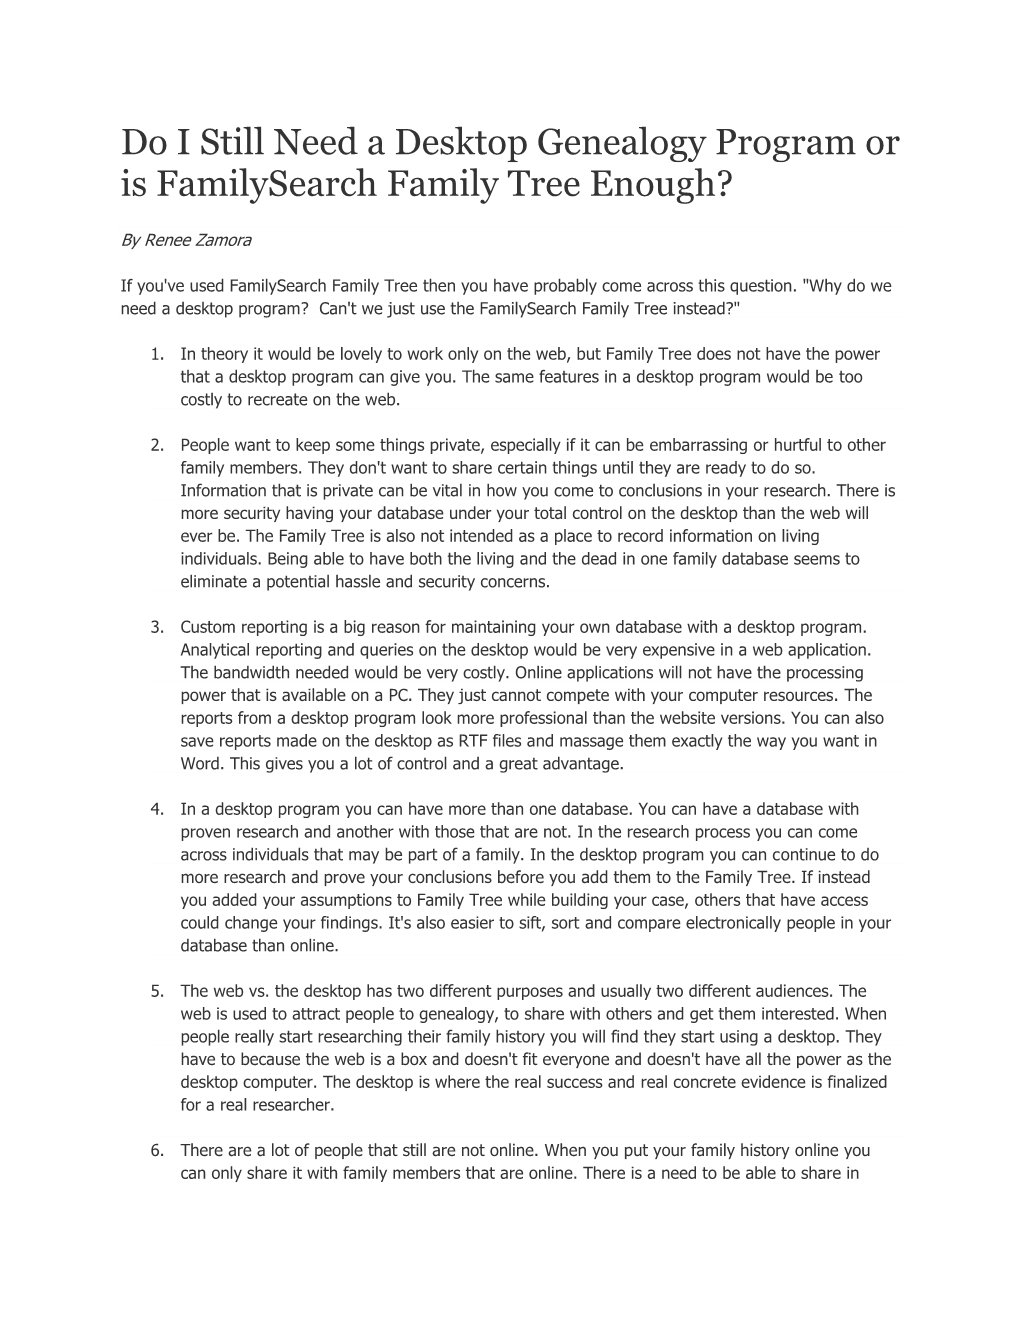 Do I Still Need a Desktop Genealogy Program Or Is Familysearch Family Tree Enough?